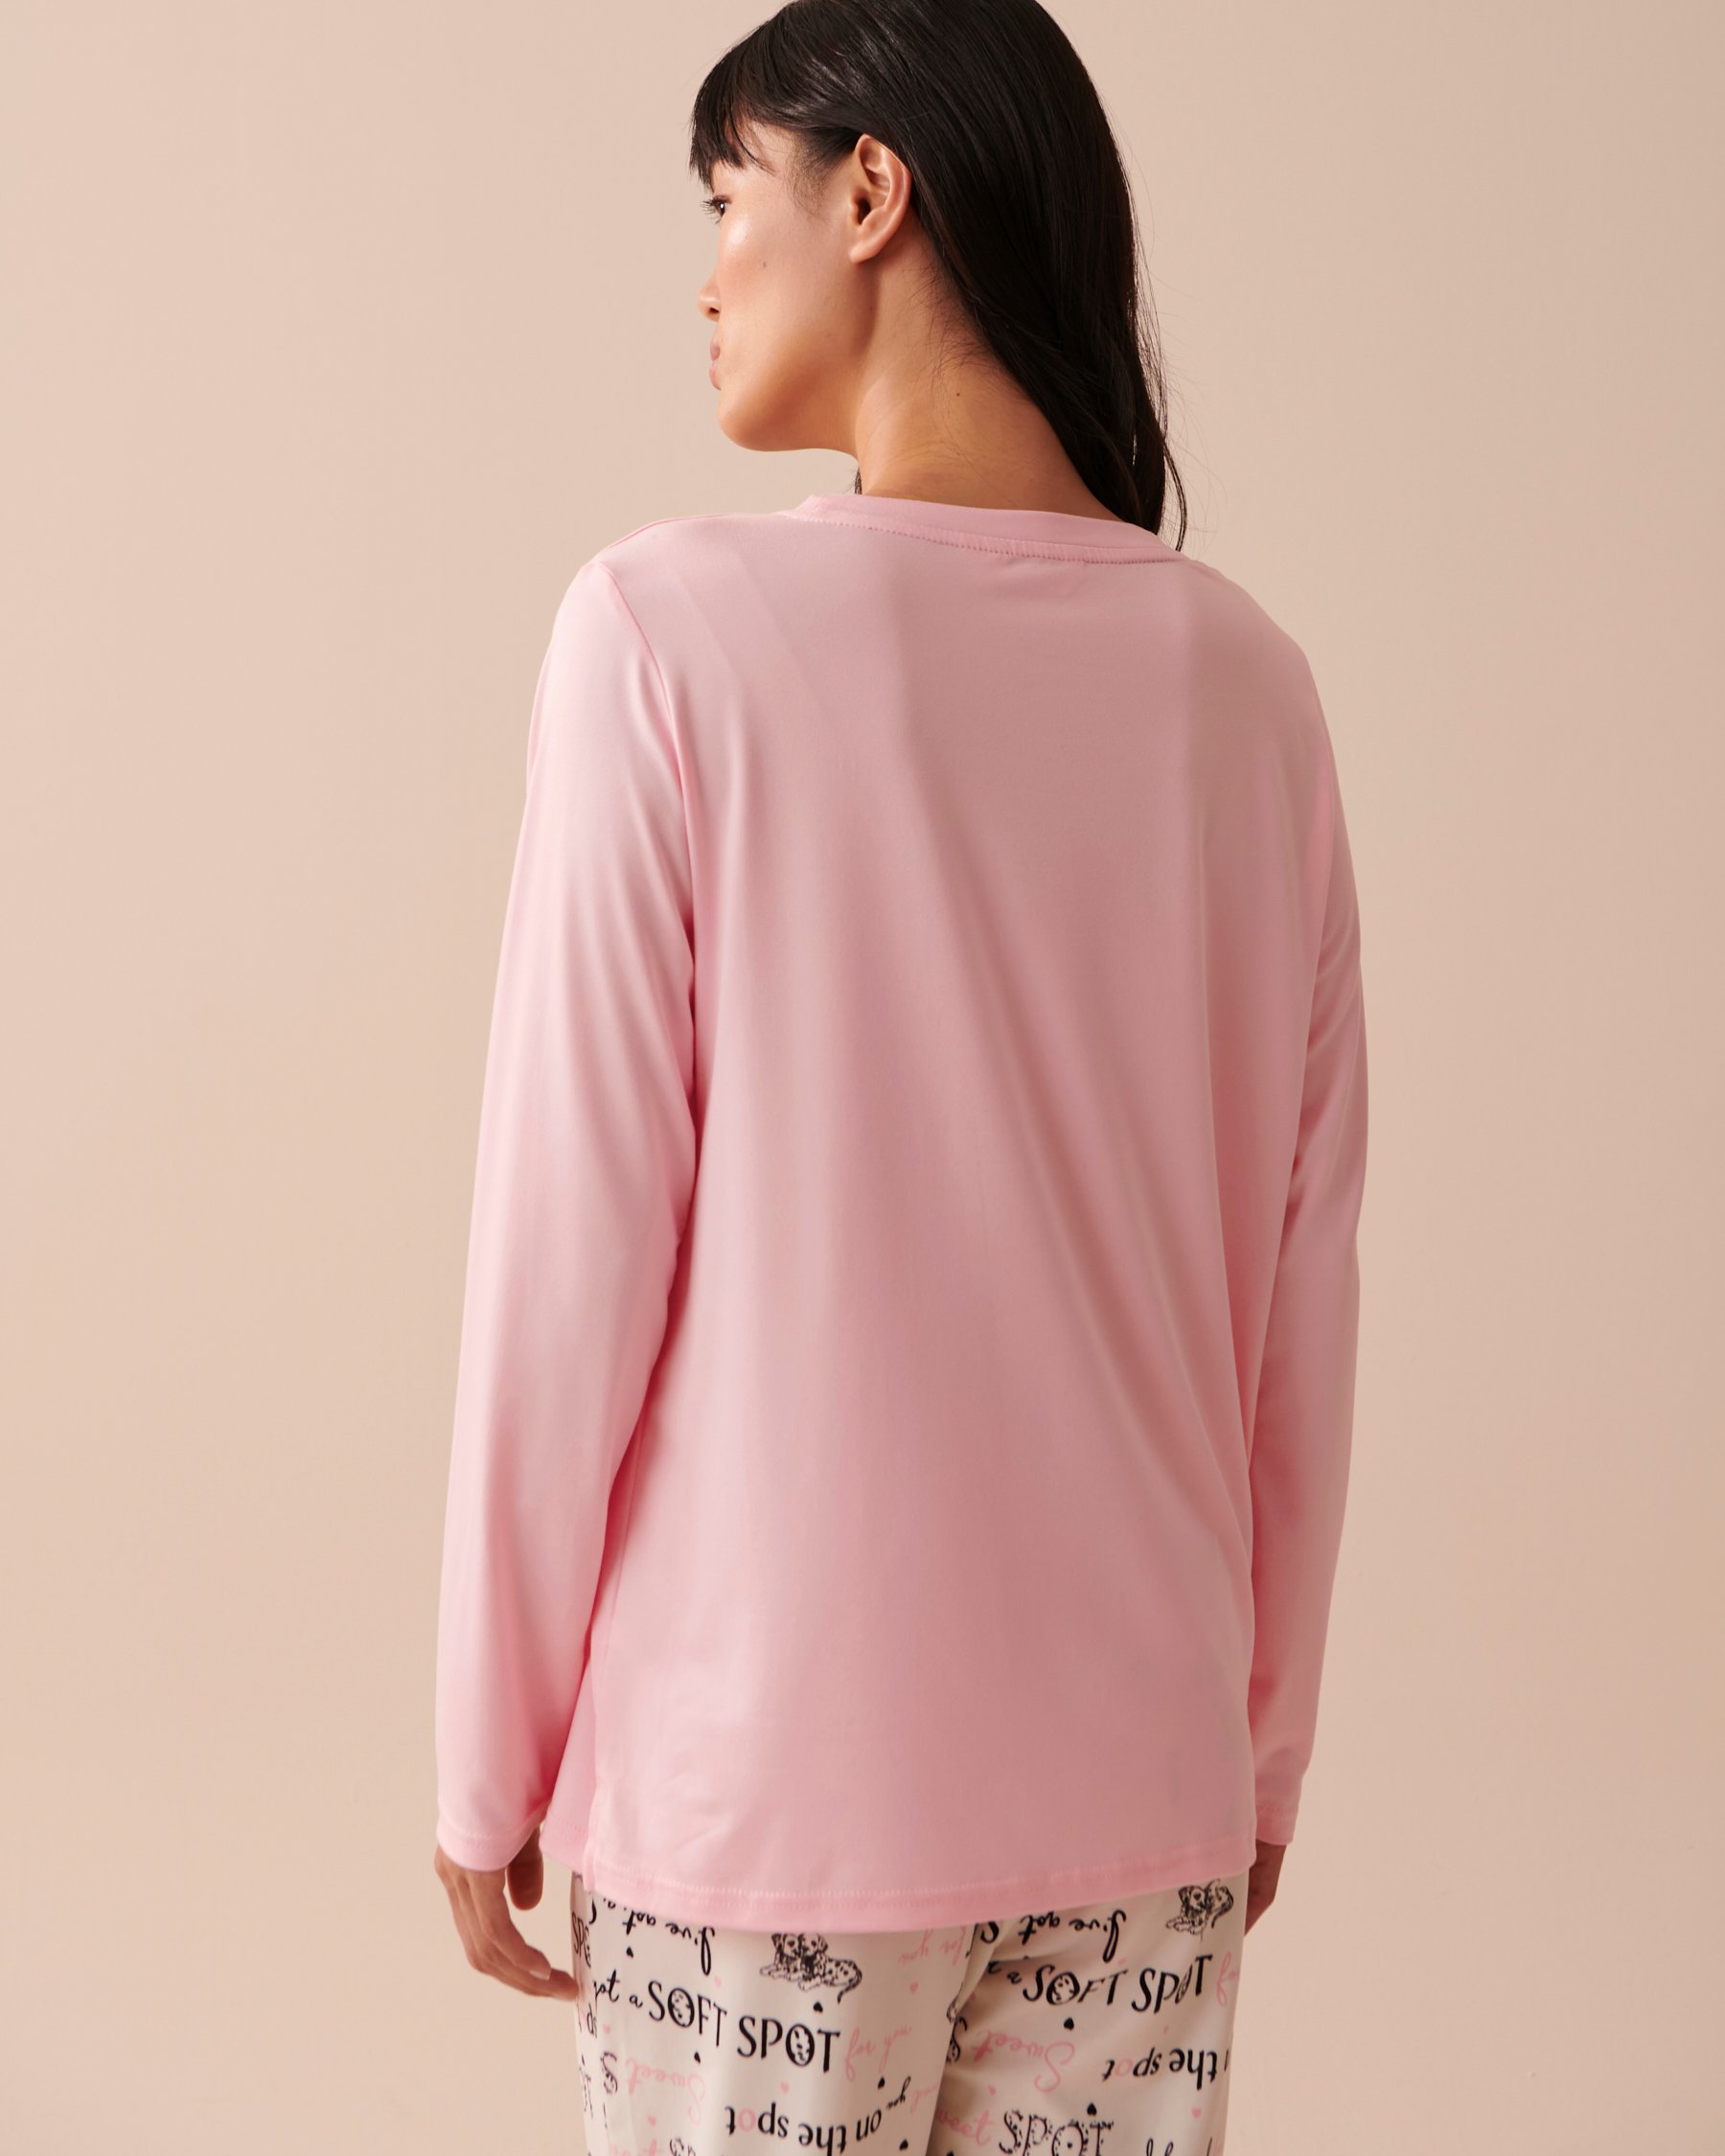 LA VIE EN ROSE Dalmatians Super Soft Long Sleeve Shirt Tender Pink 40100534 - View2